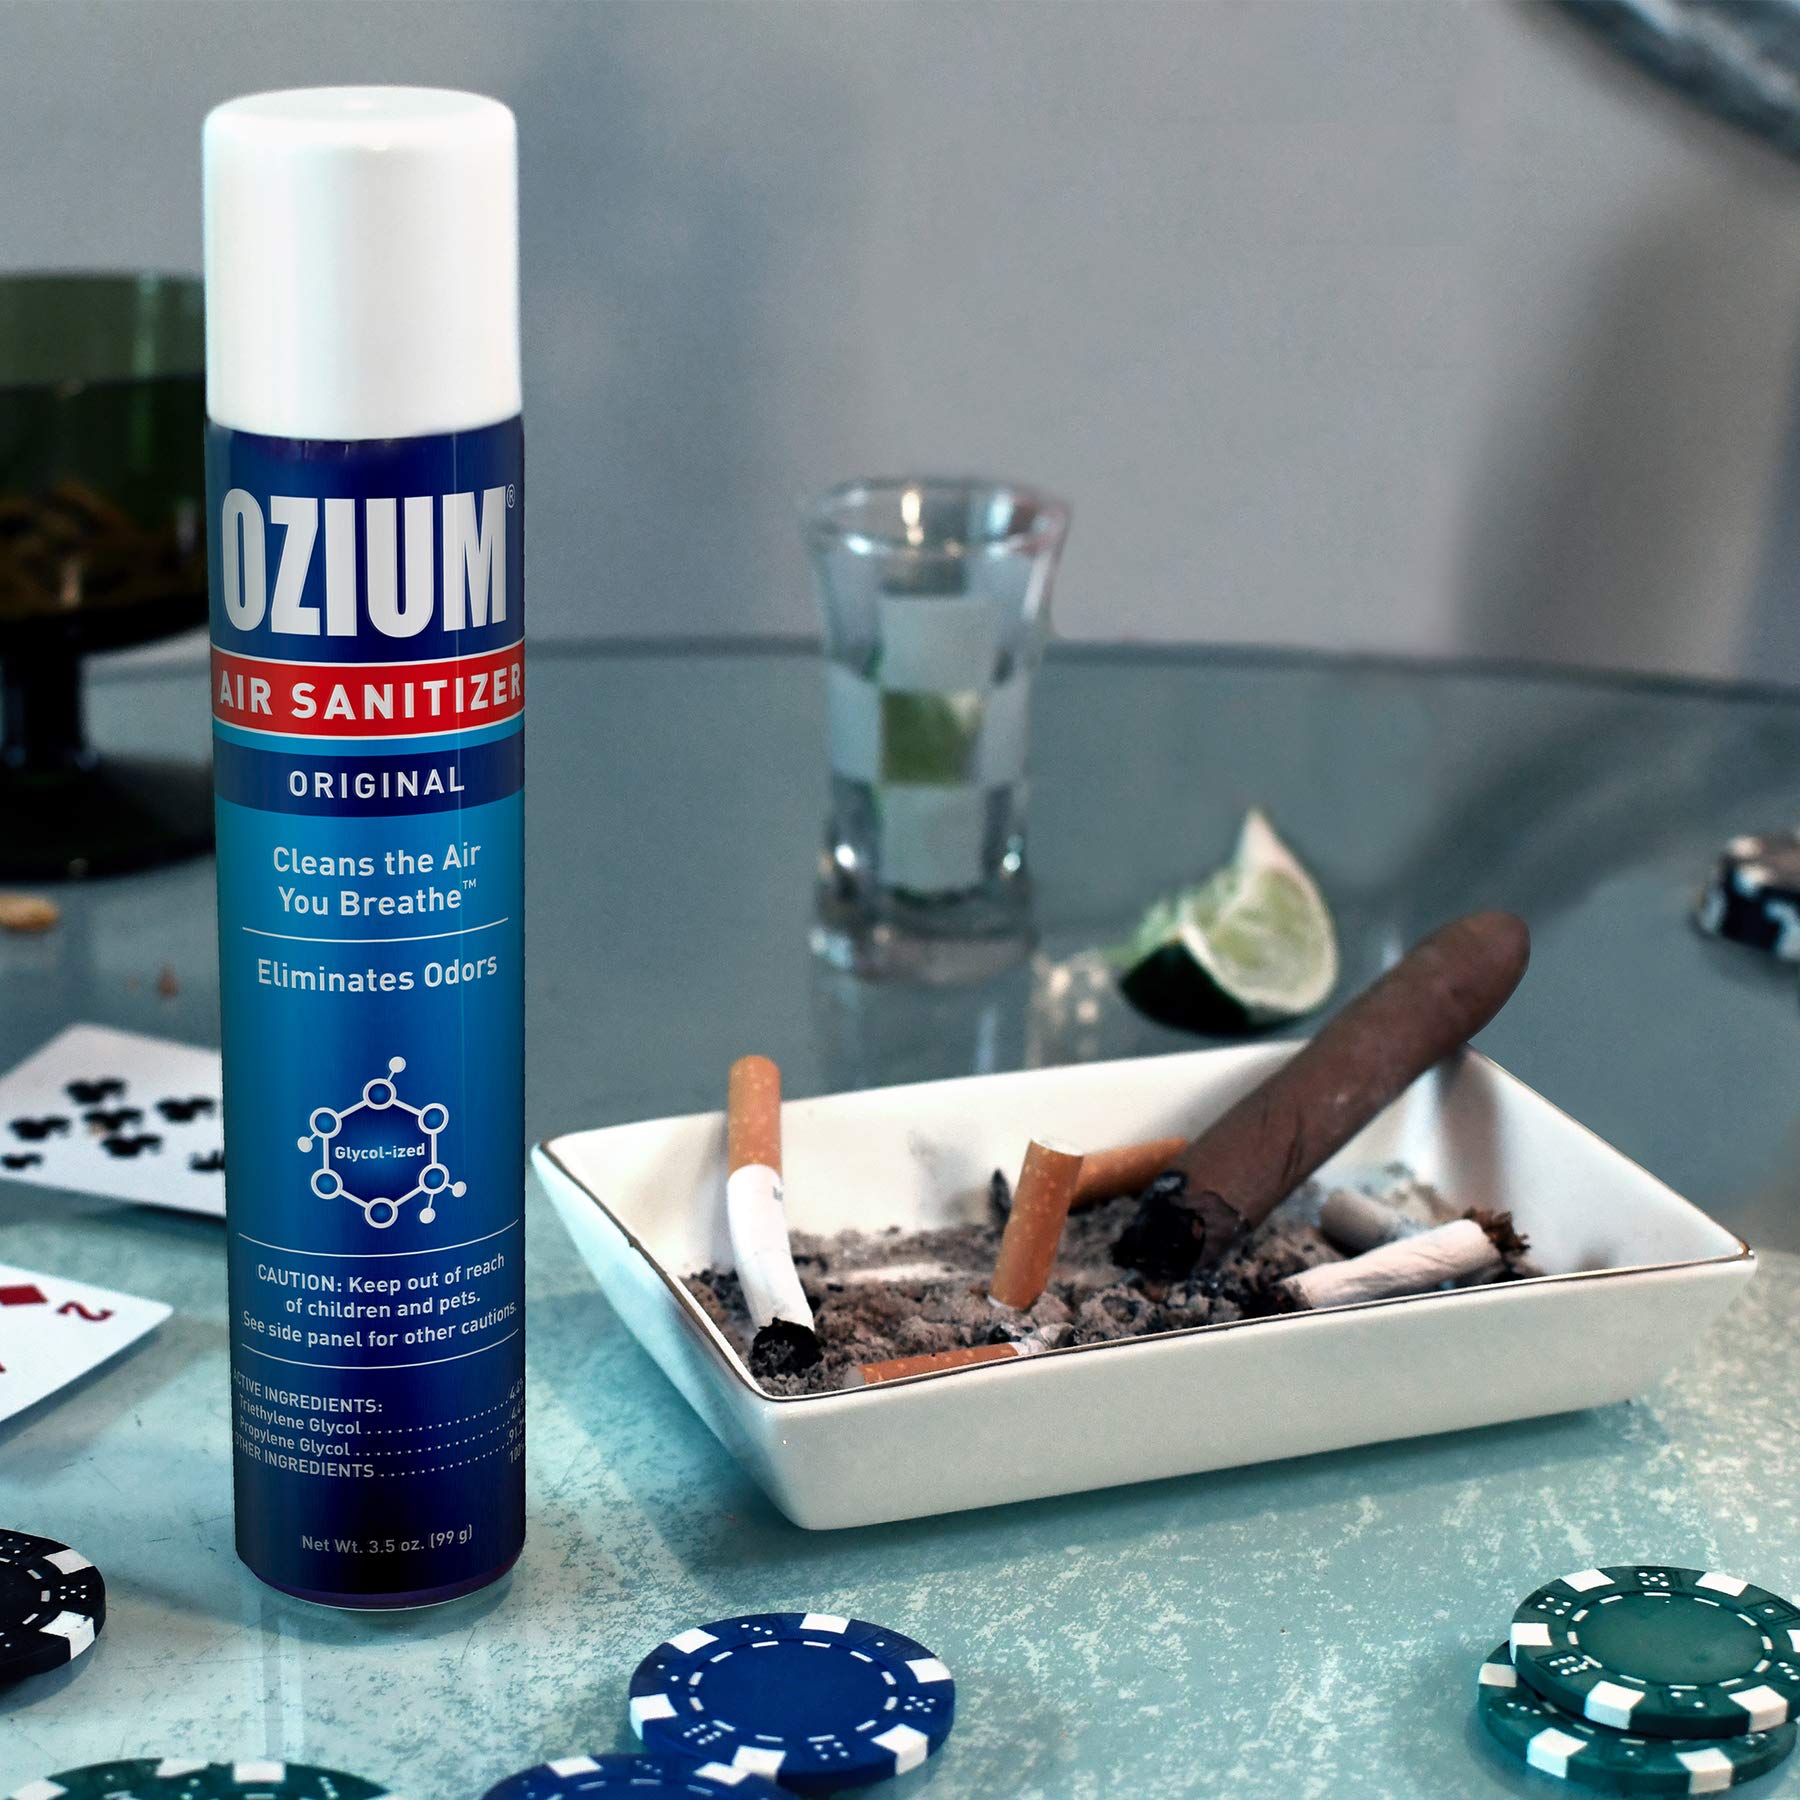 OZIUM® 8 Oz. Air Sanitizer & Odor Eliminator for Homes, Cars, Offices and More, Original Scent - 2 Pack